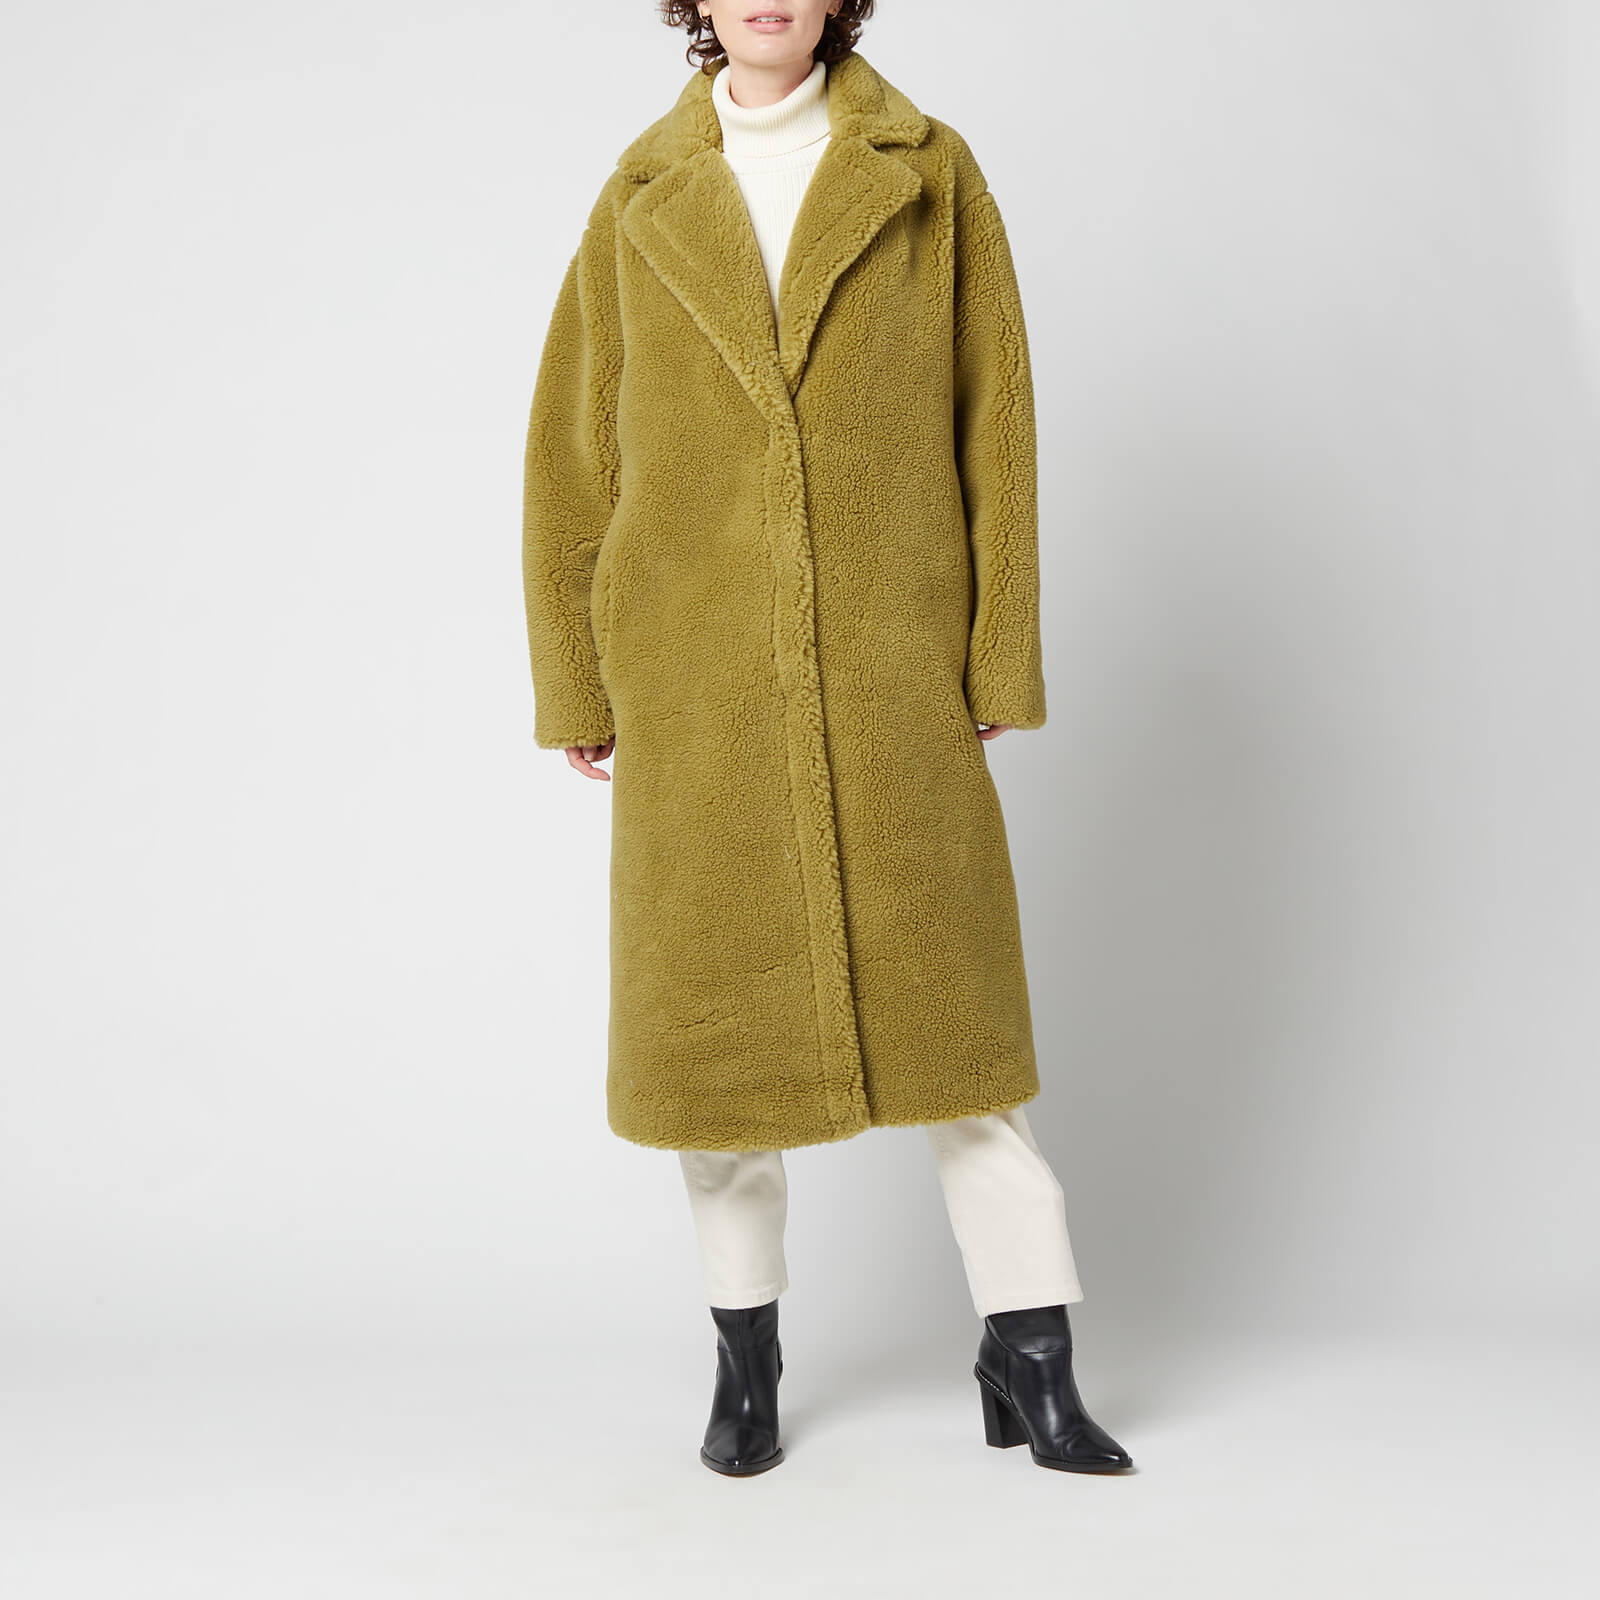 stand studio women's maria faux fur teddy coat - army green - fr 36/uk 8